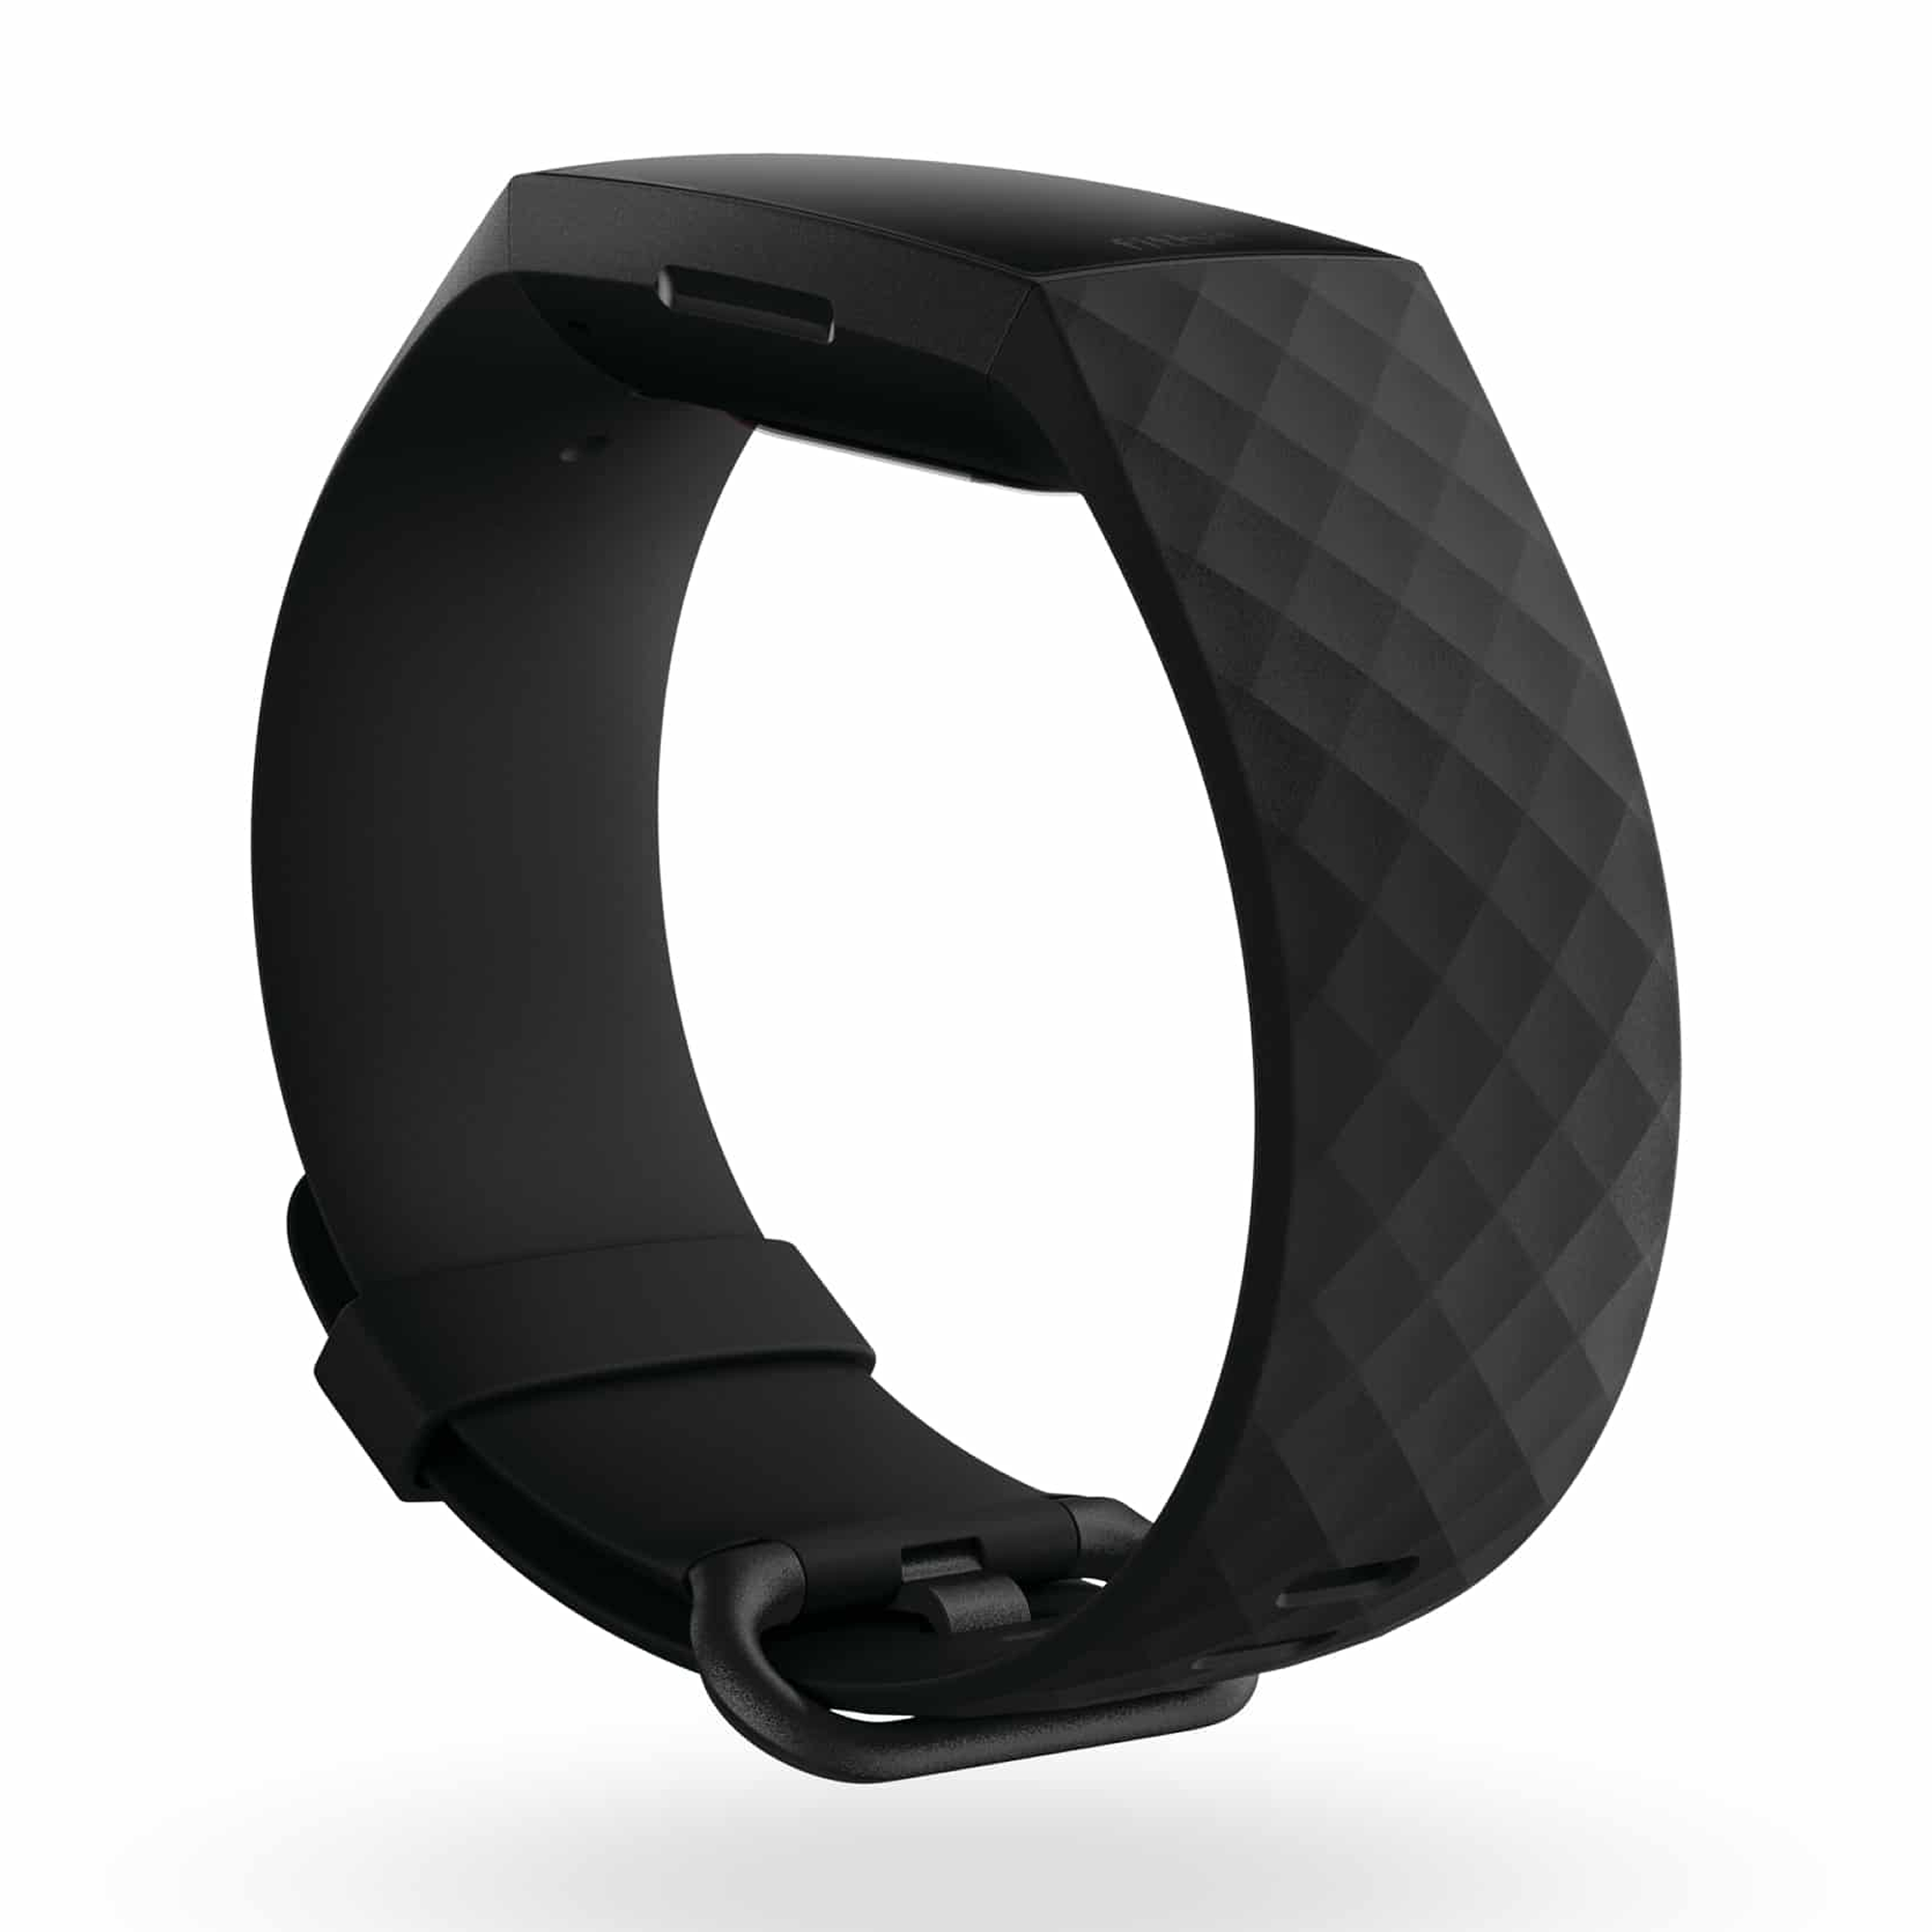 Tracker Fitbit Charge 4 FB417BKBK-EU bundle